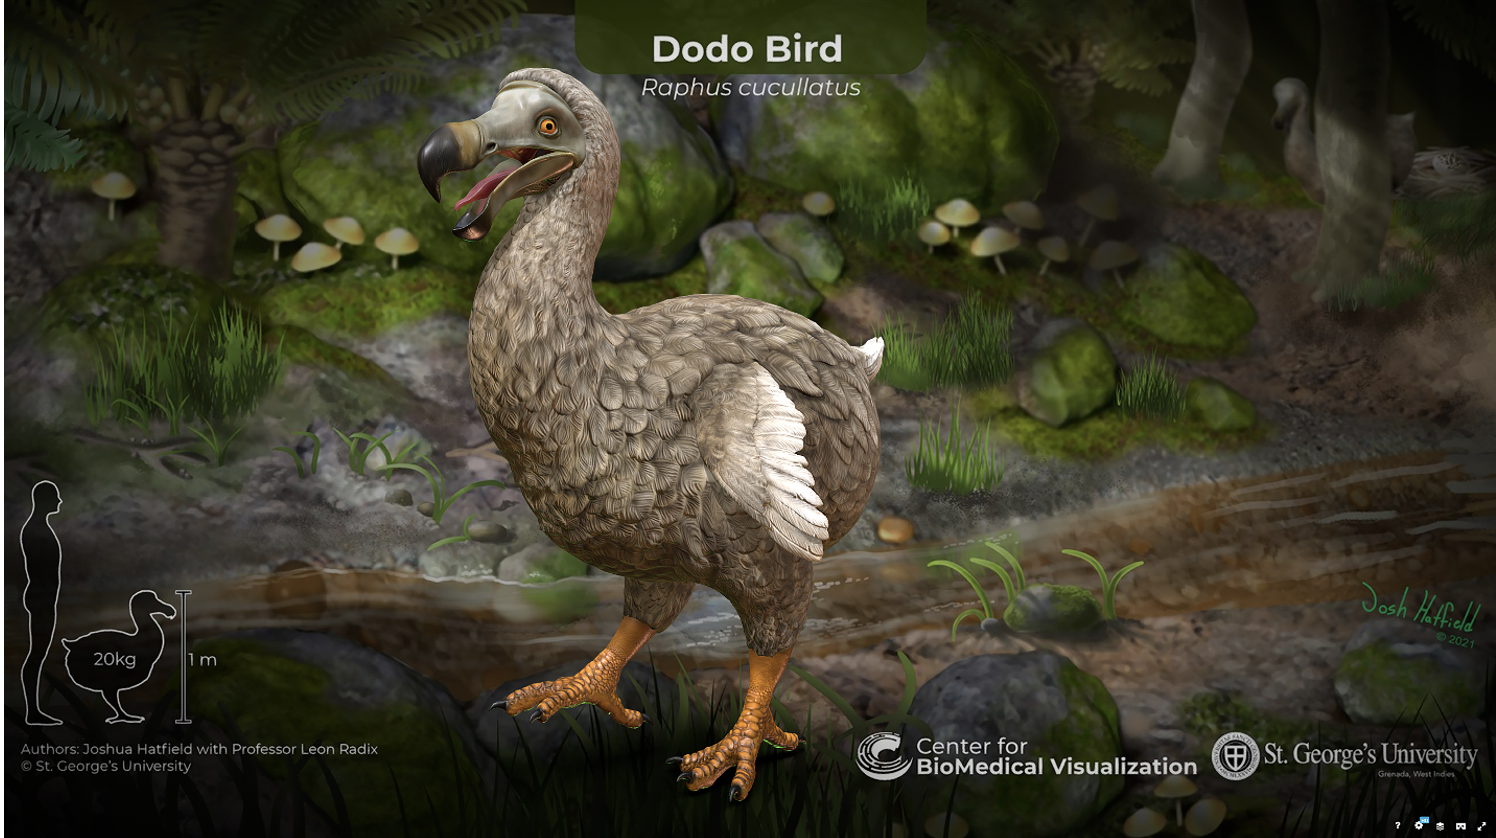 Fig 1: A screenshot from Sketchfab of the Dodo bird model.